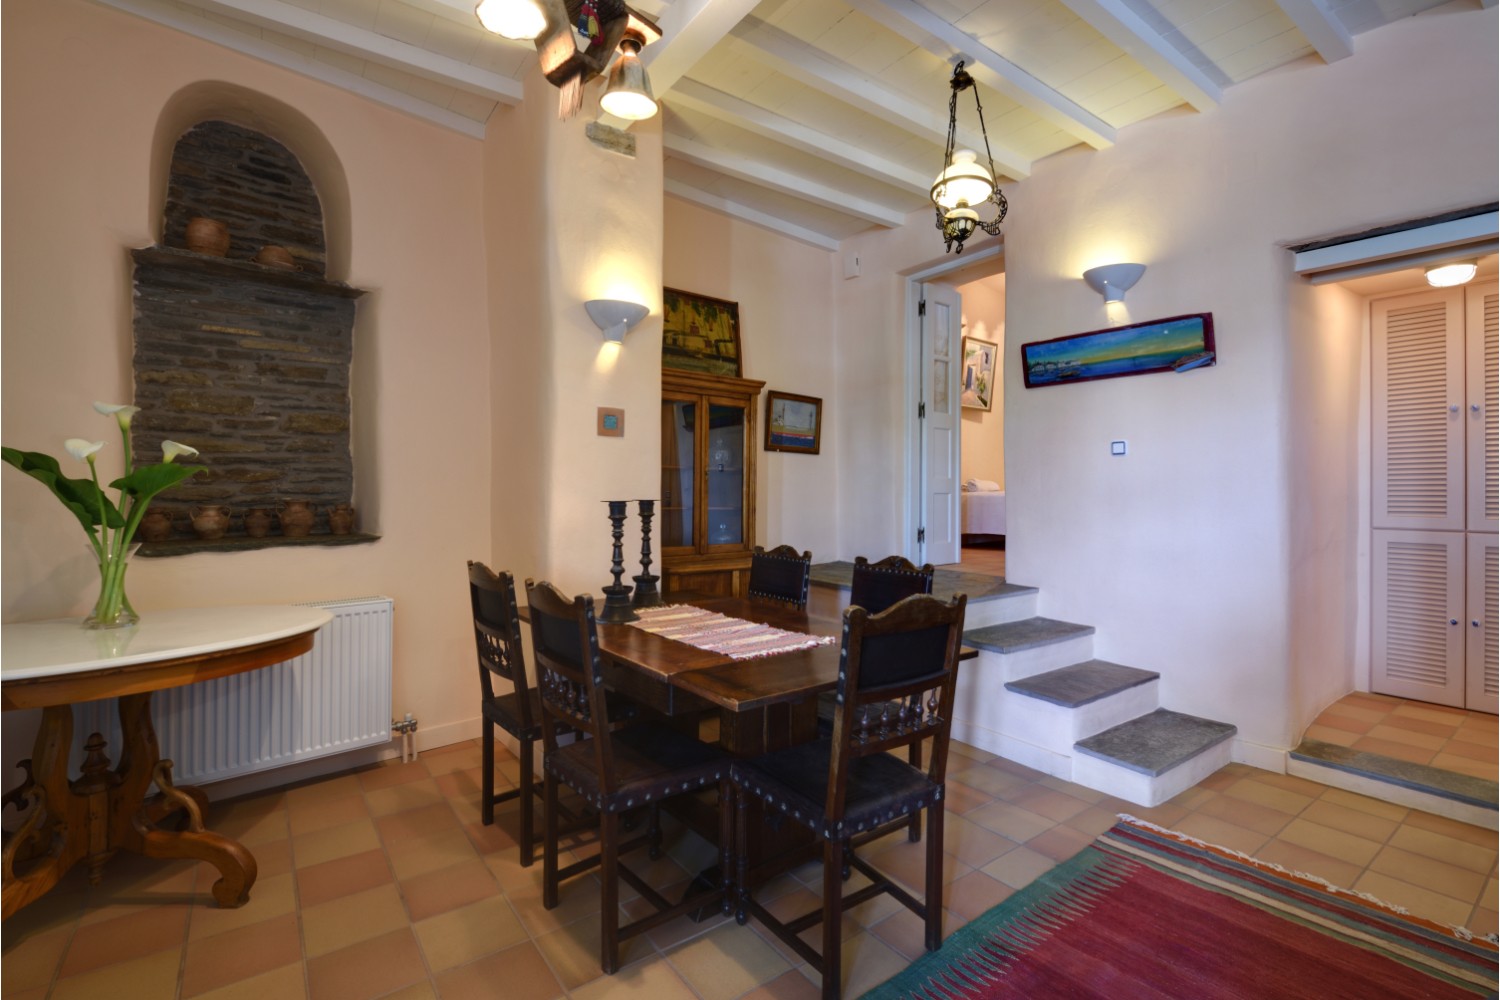 Amalgam Homes Pano Spiti villa, Tinos island: image interior gallery